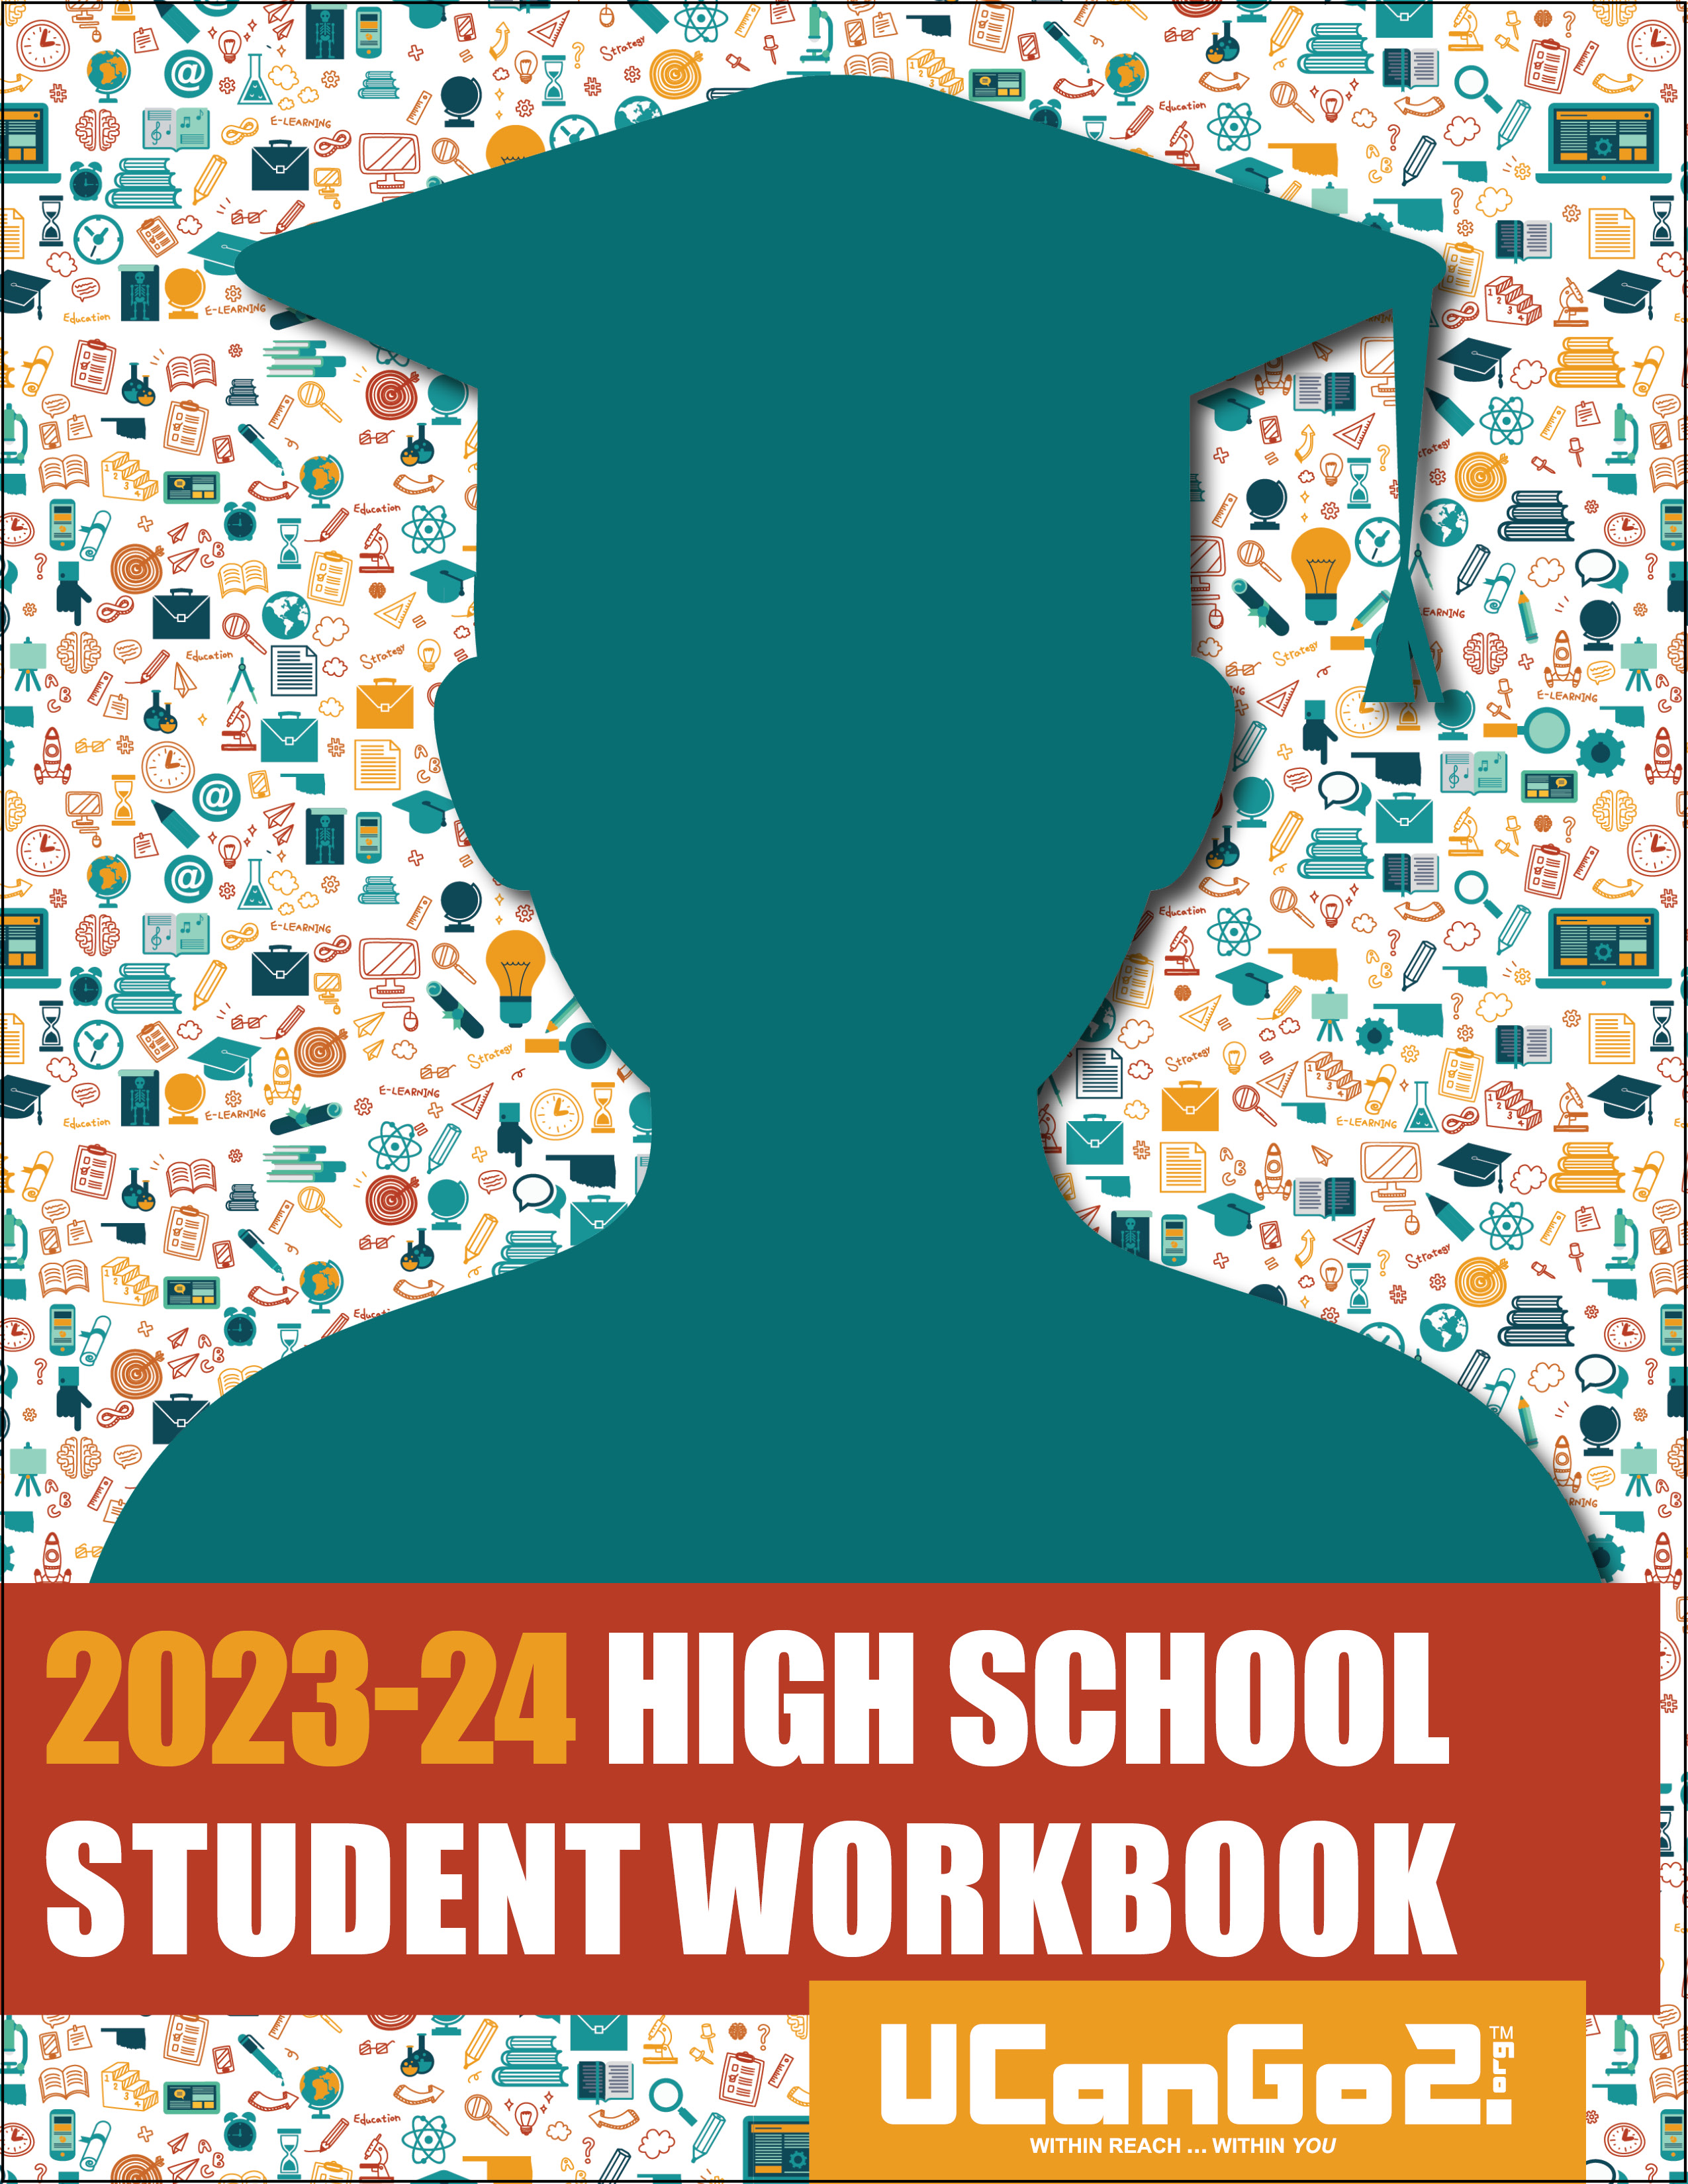 PDF of High School Student Workbook